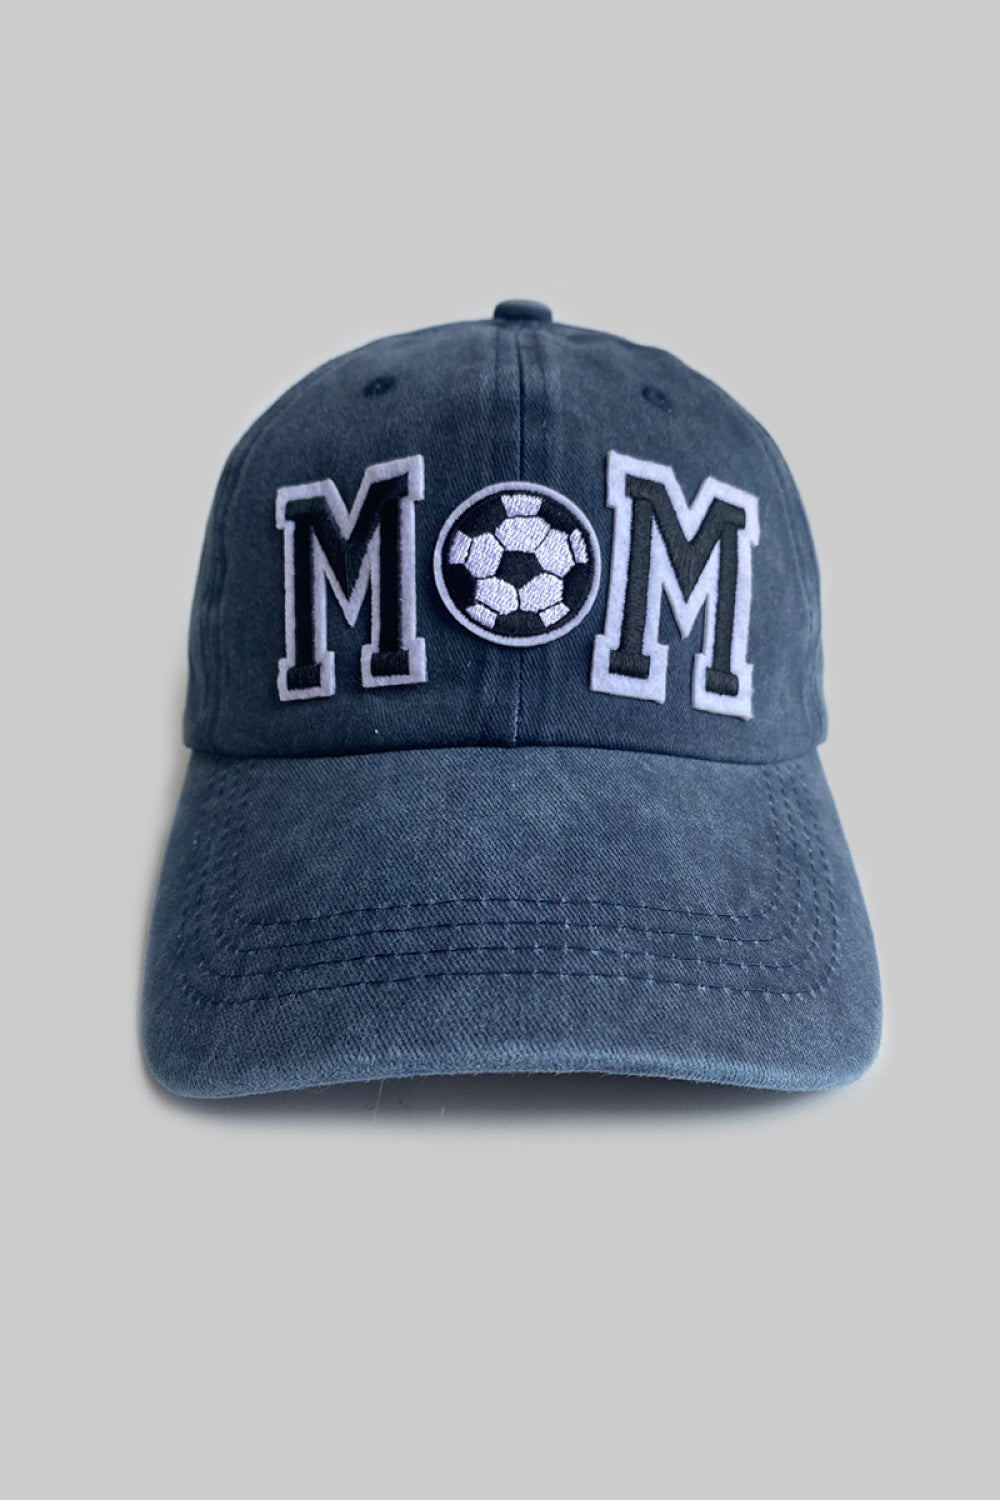 5 Colors - Soccer MOM Baseball Cap Ti Amo I love you